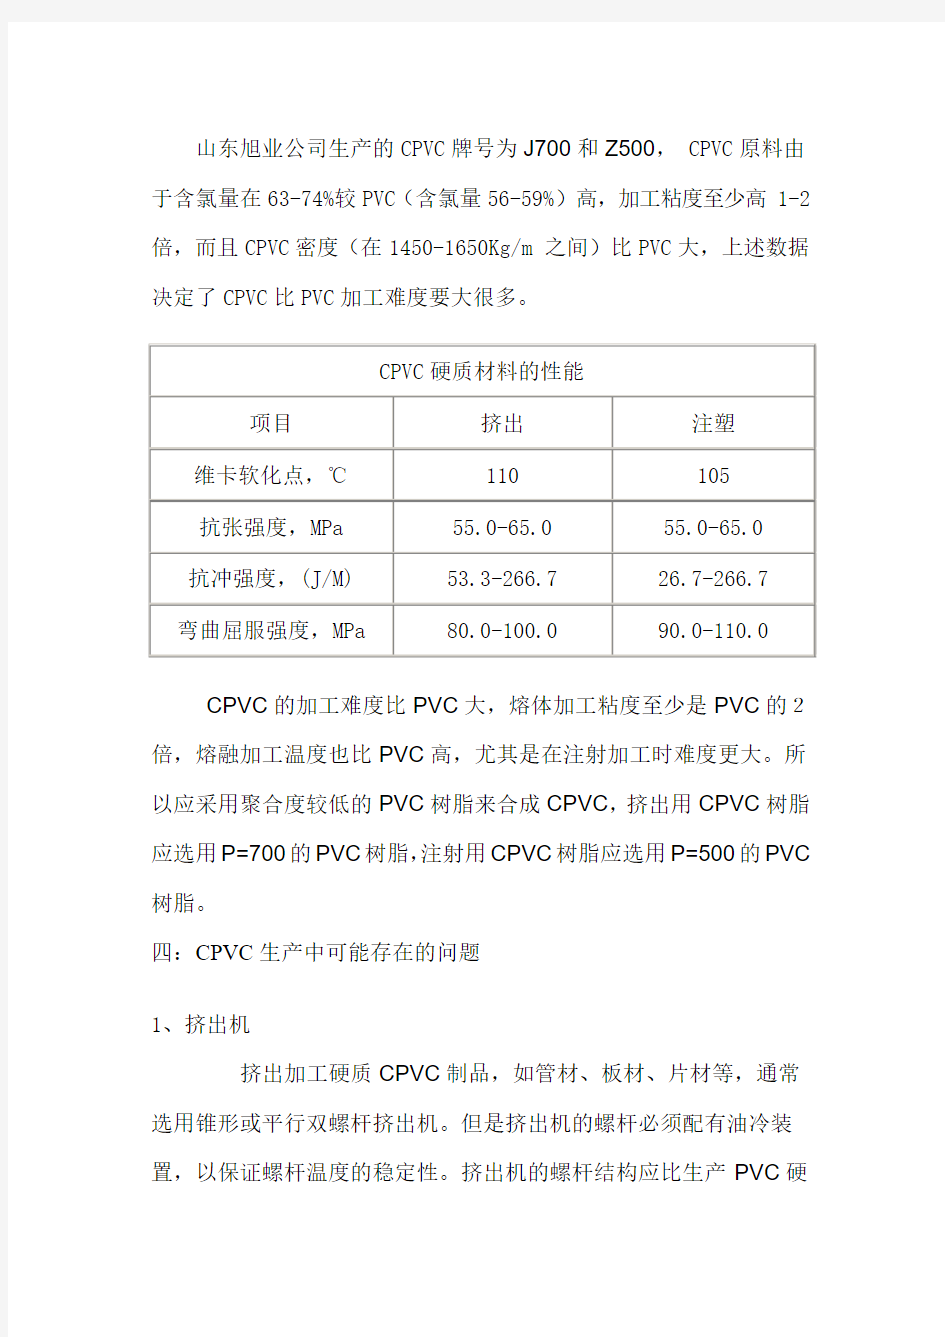 C-PVC工艺生产资料